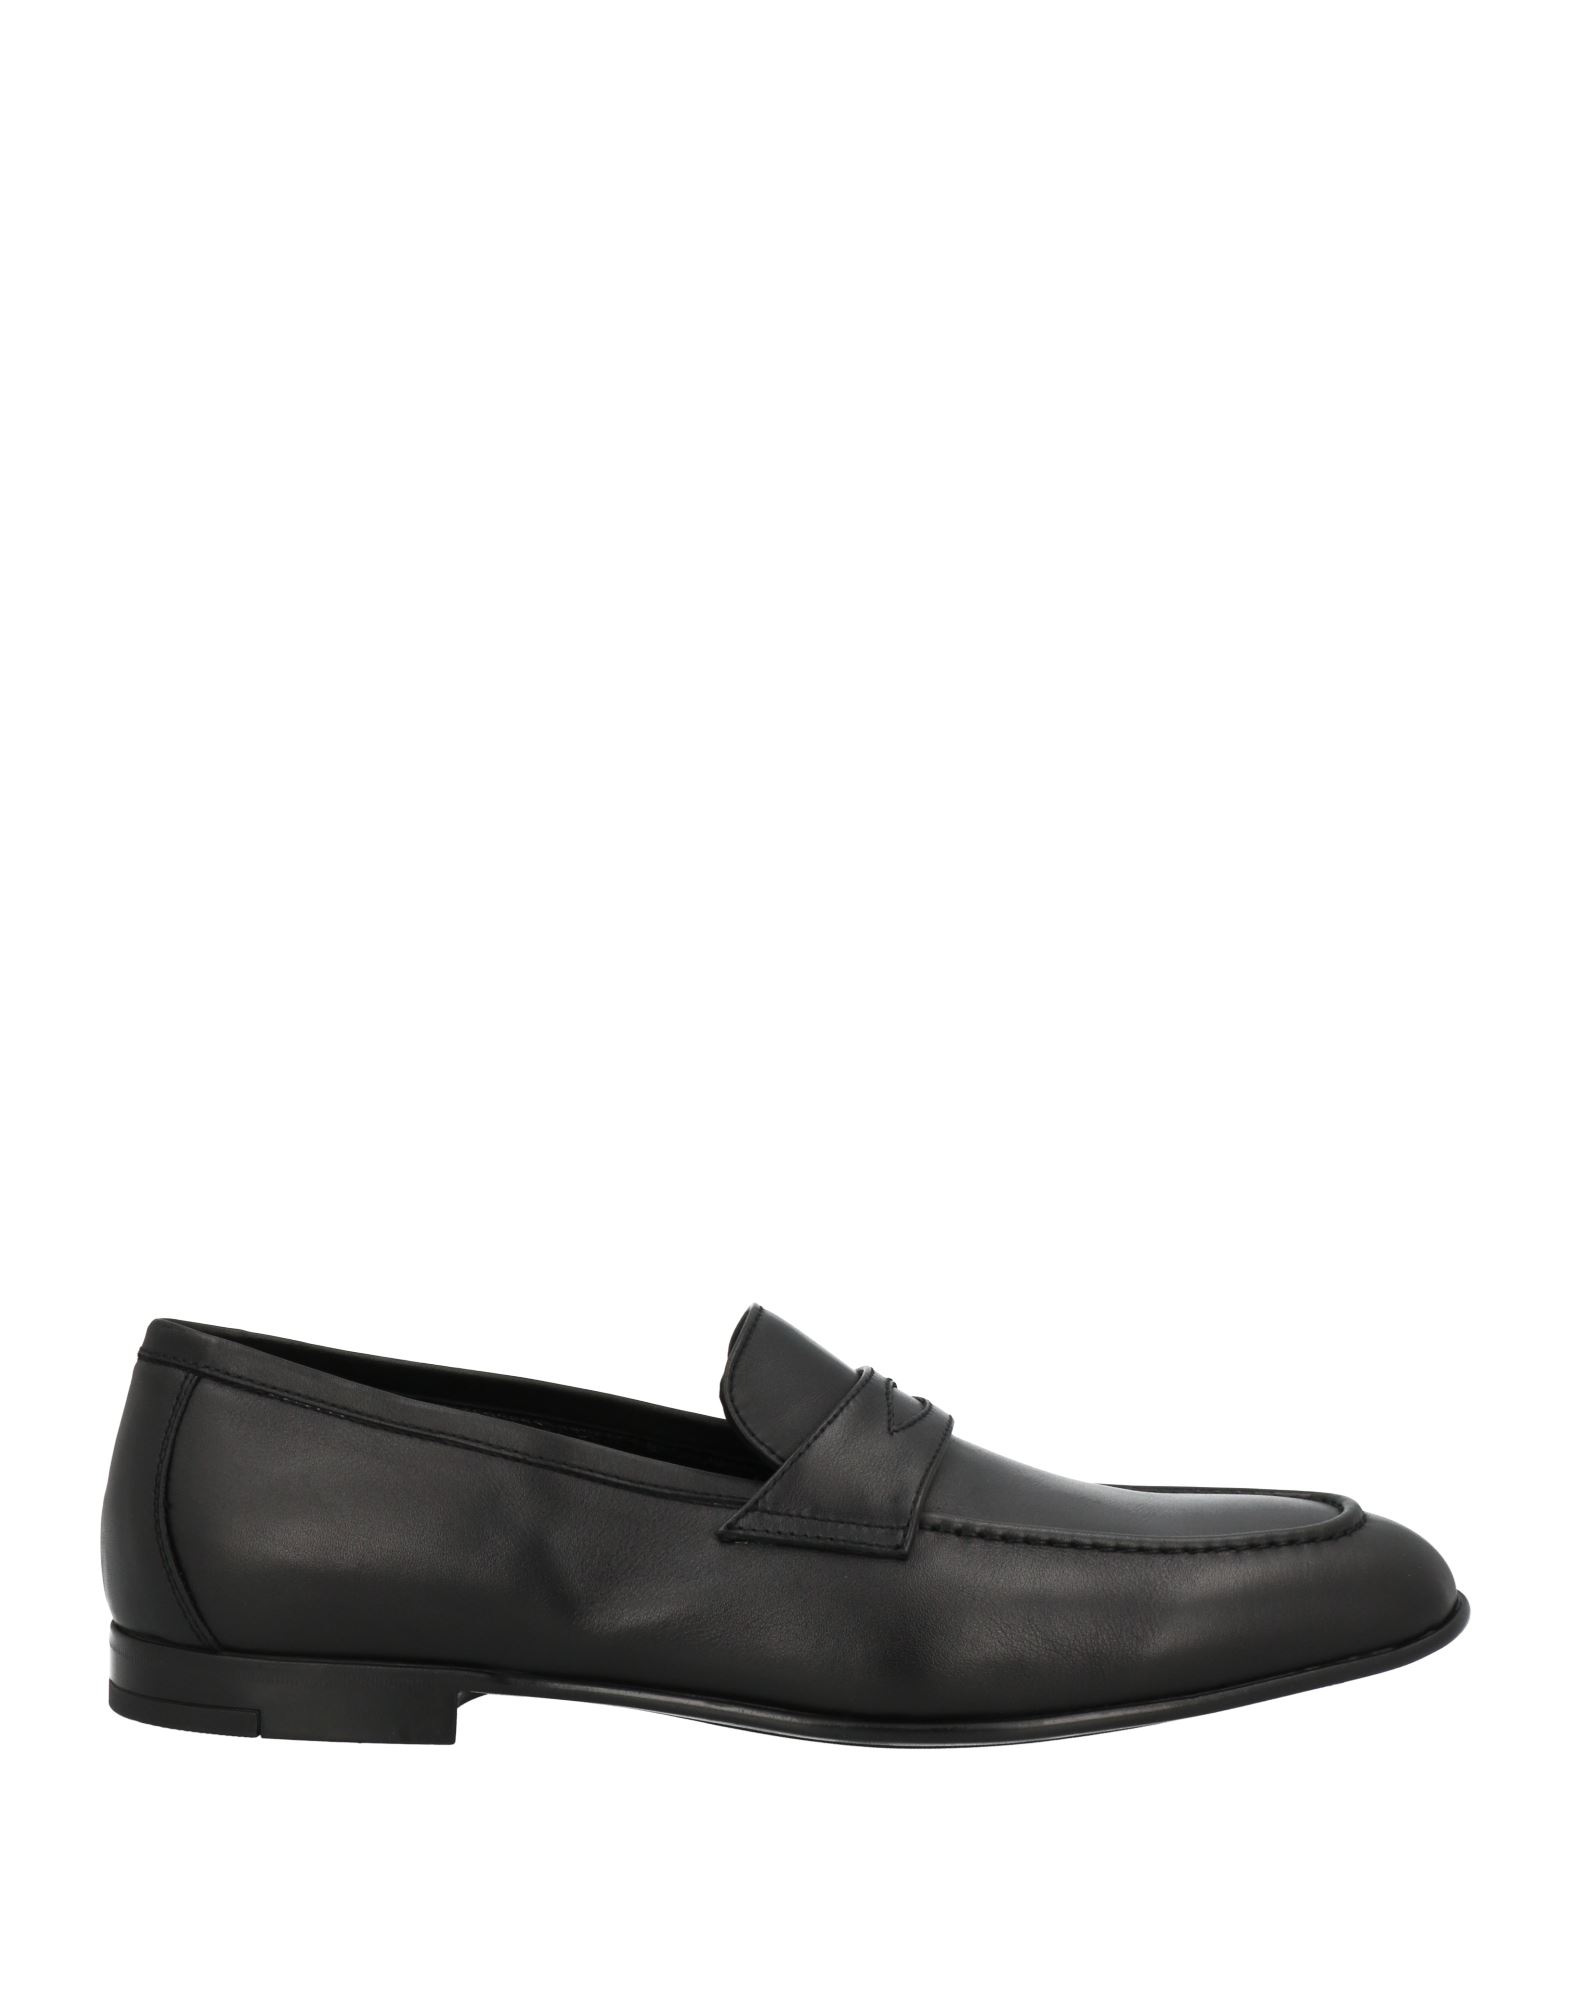 Doucal's Man Loafers Black Size 6 Calfskin